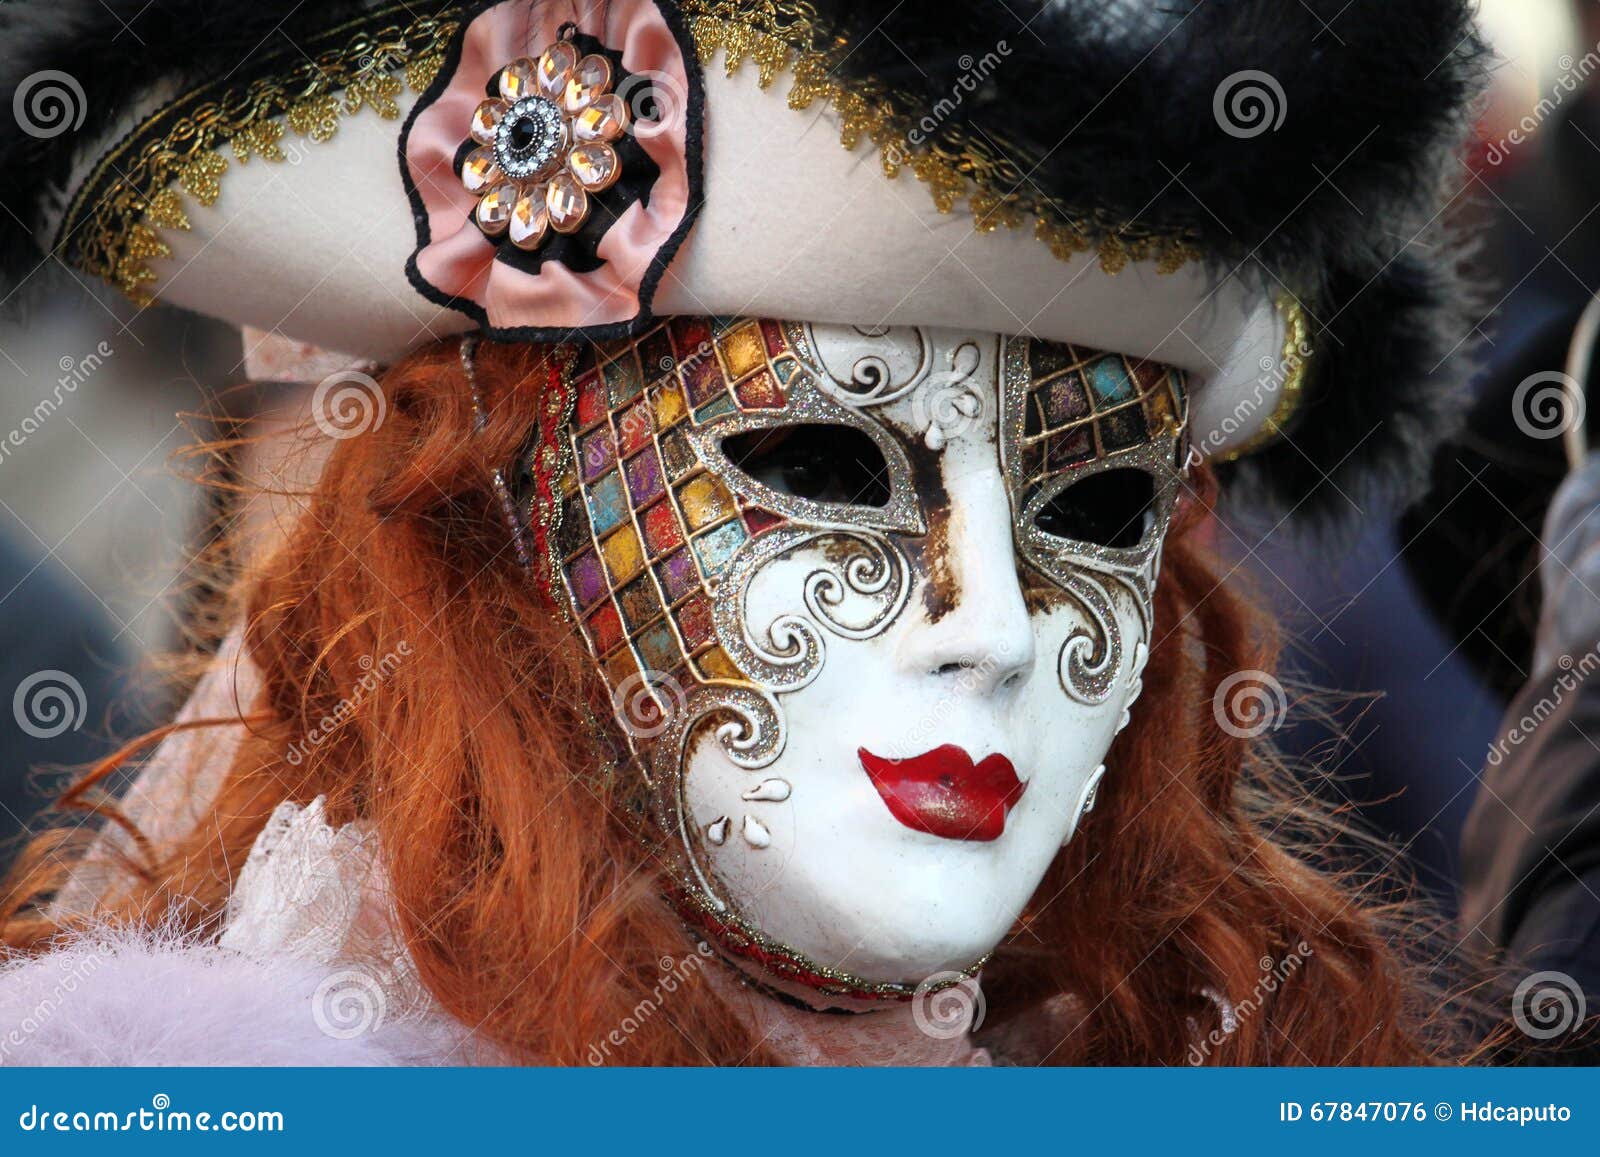 Carnival of Venice - Venetian Masquerade Editorial Photo - Image of ...